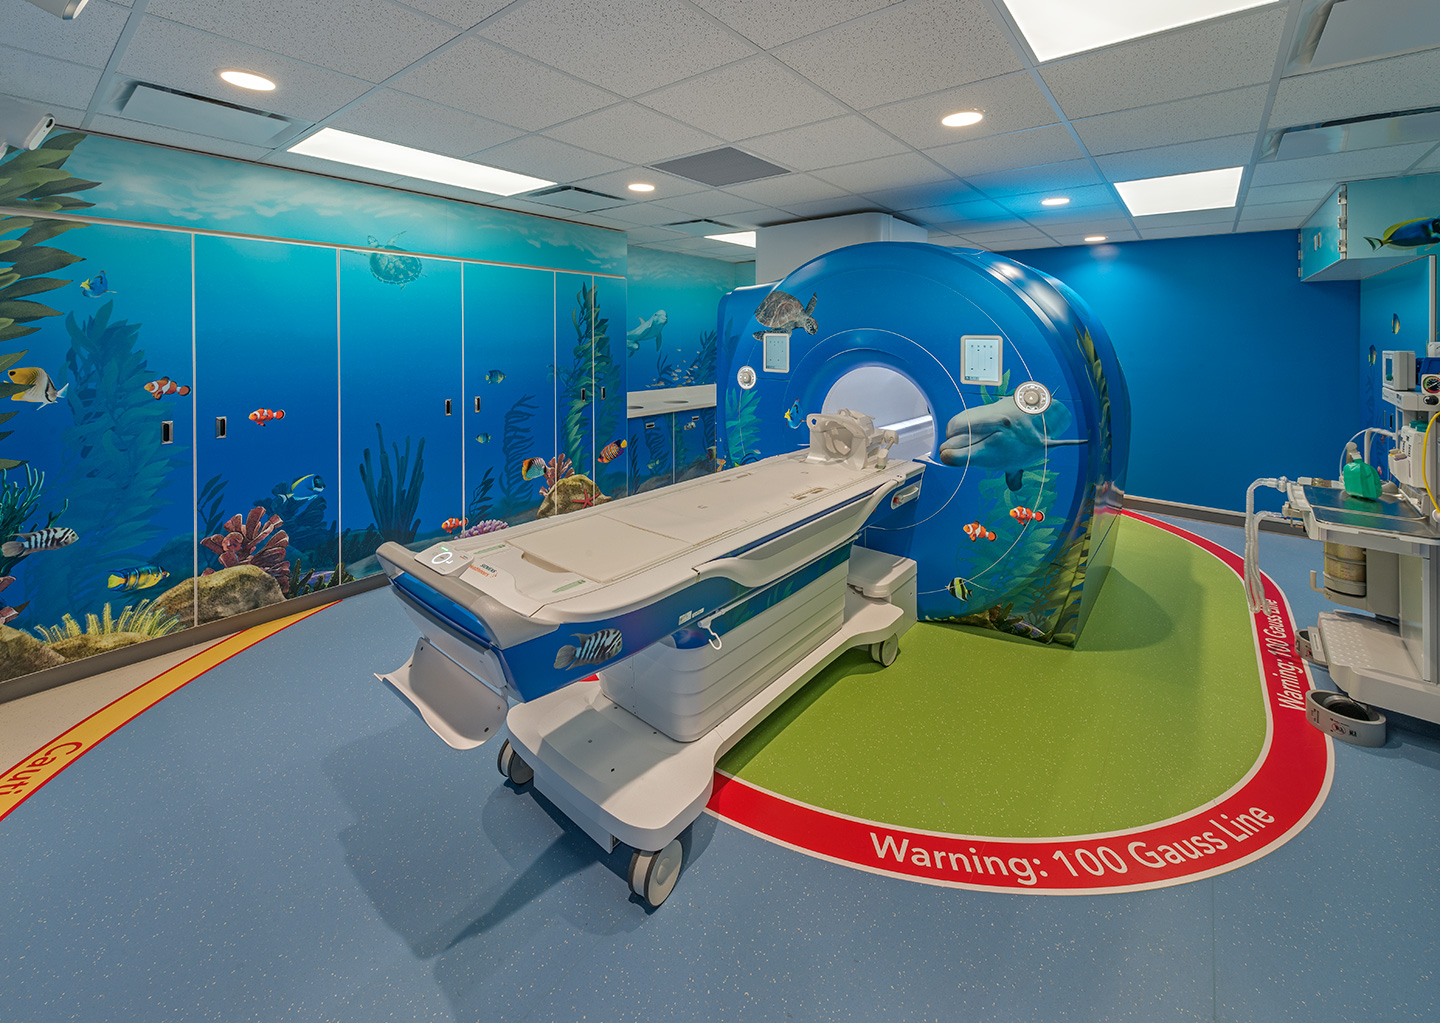 Texas Children's Hospital West Campus 2 MRI2 Replacement